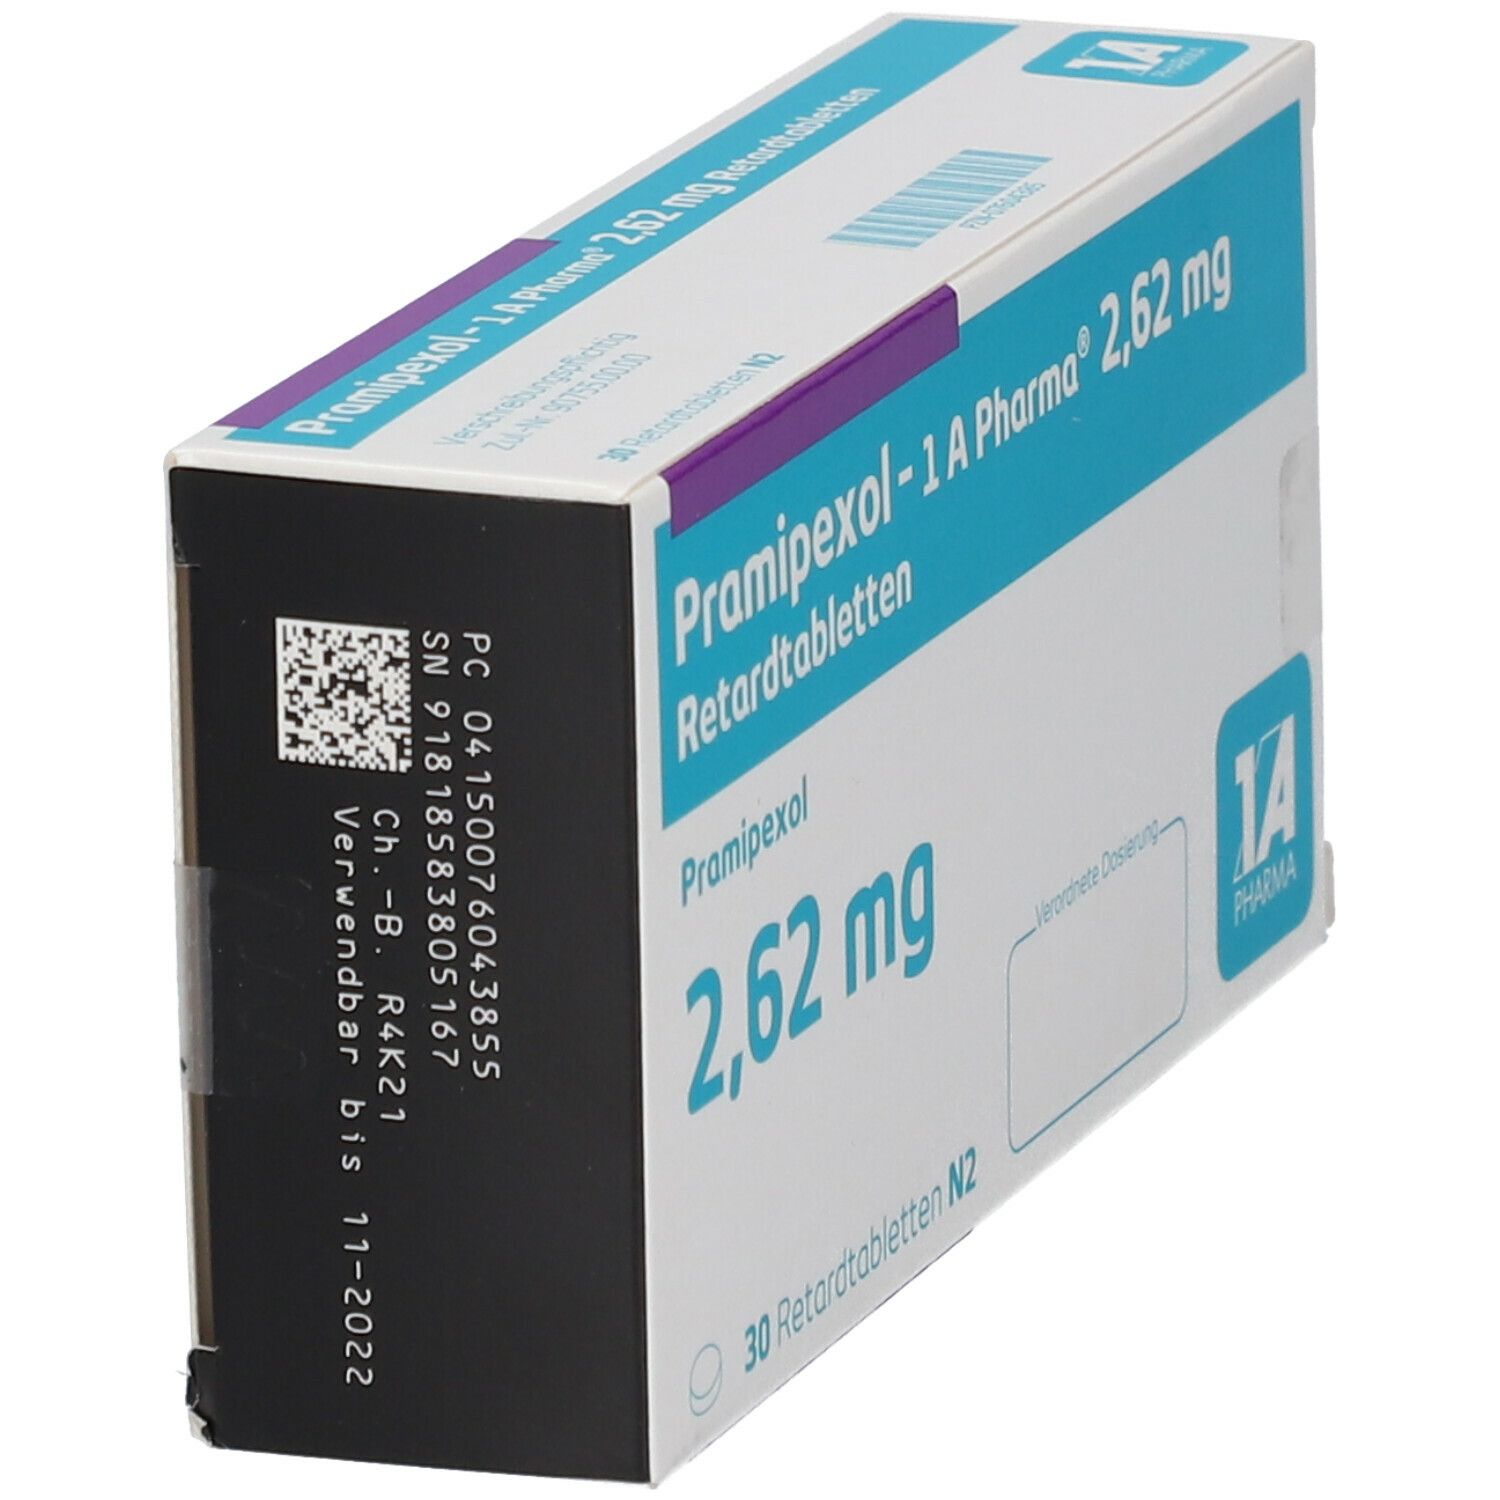 Pramipexol - 1 A Pharma® 2,62 mg